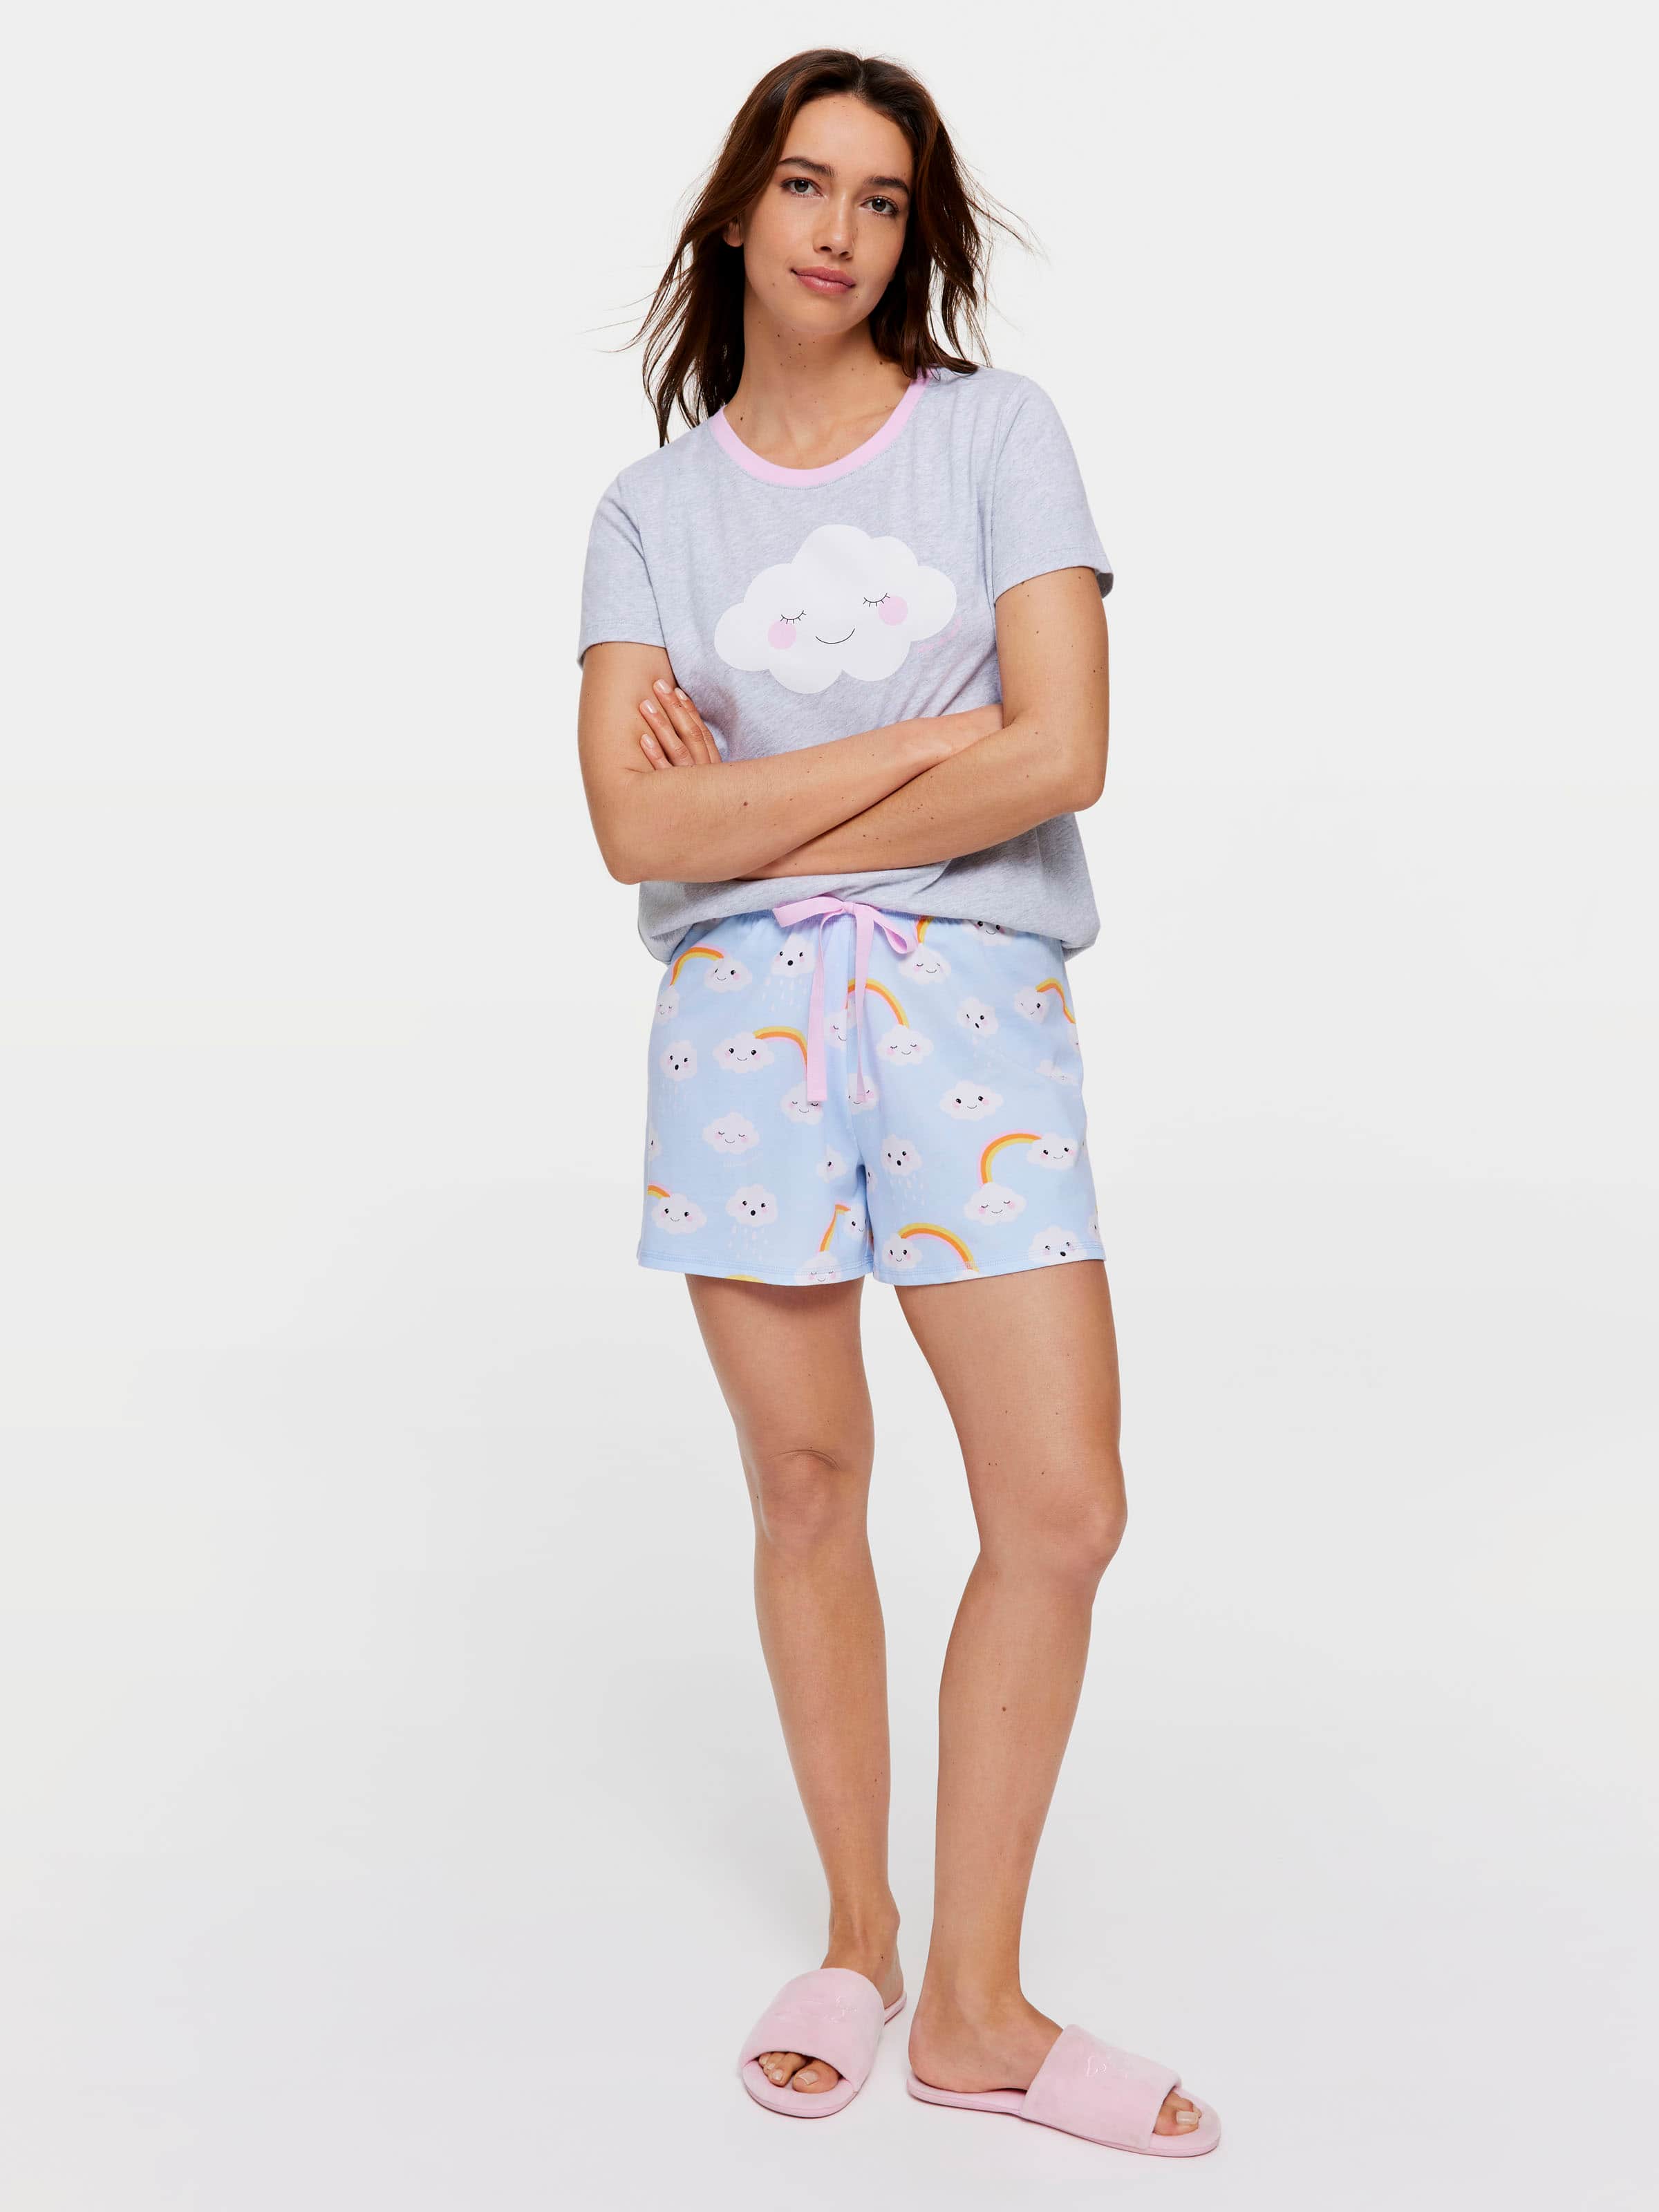 Womens PJ Shorts - Sleep Shorts For Women